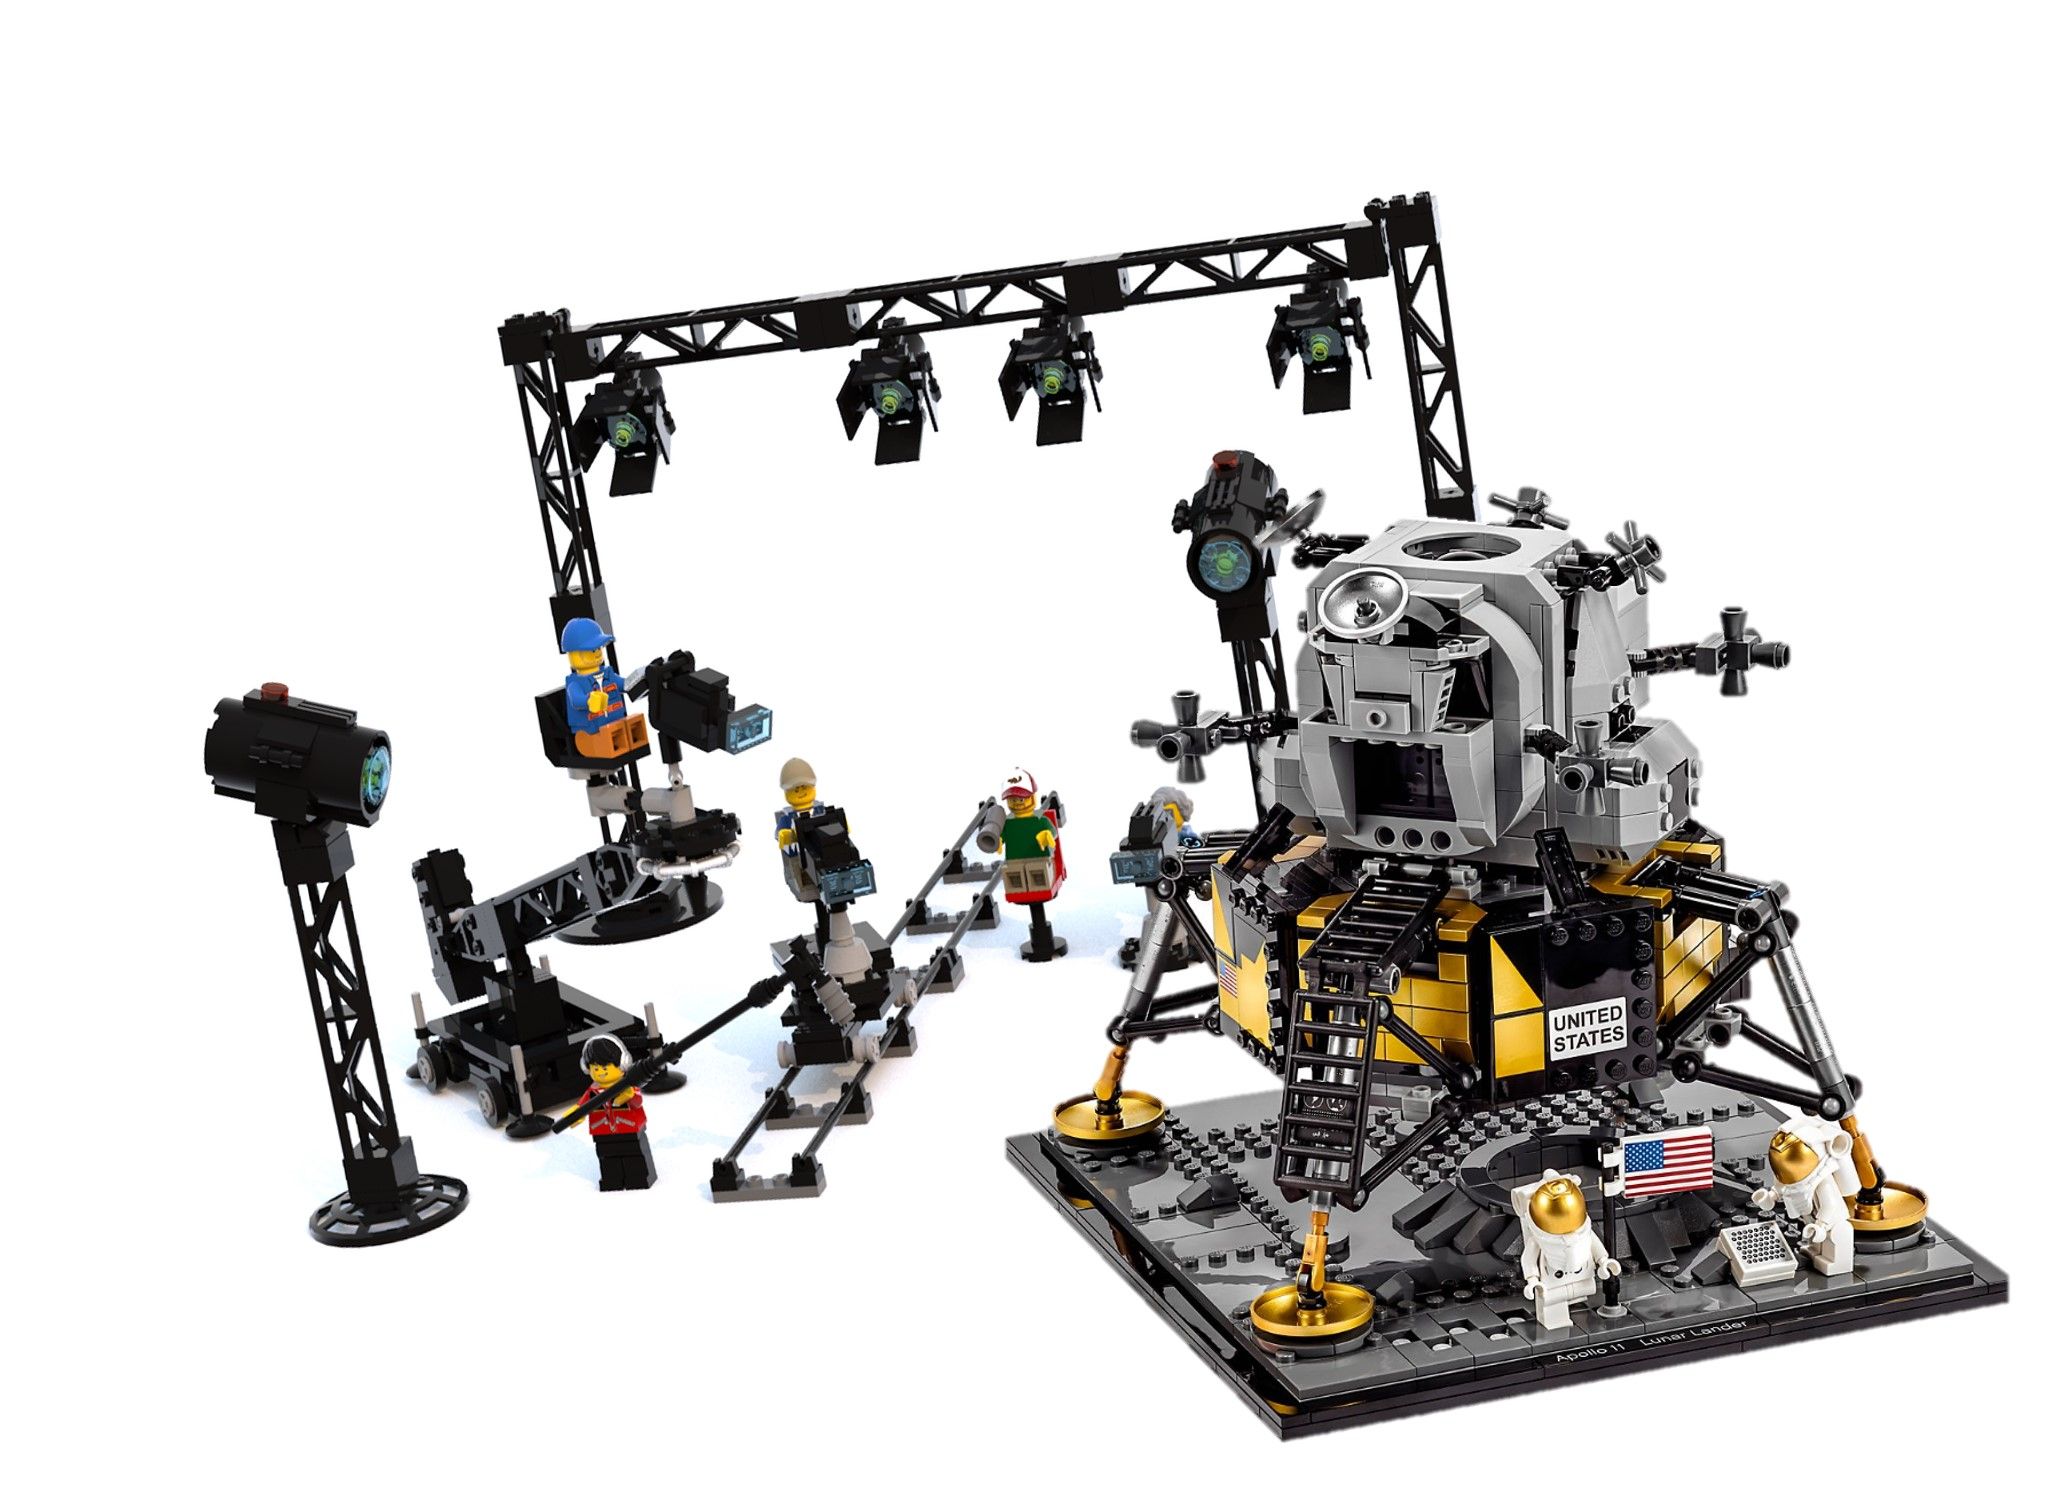 Lego's new Lunar Landing set looks dope